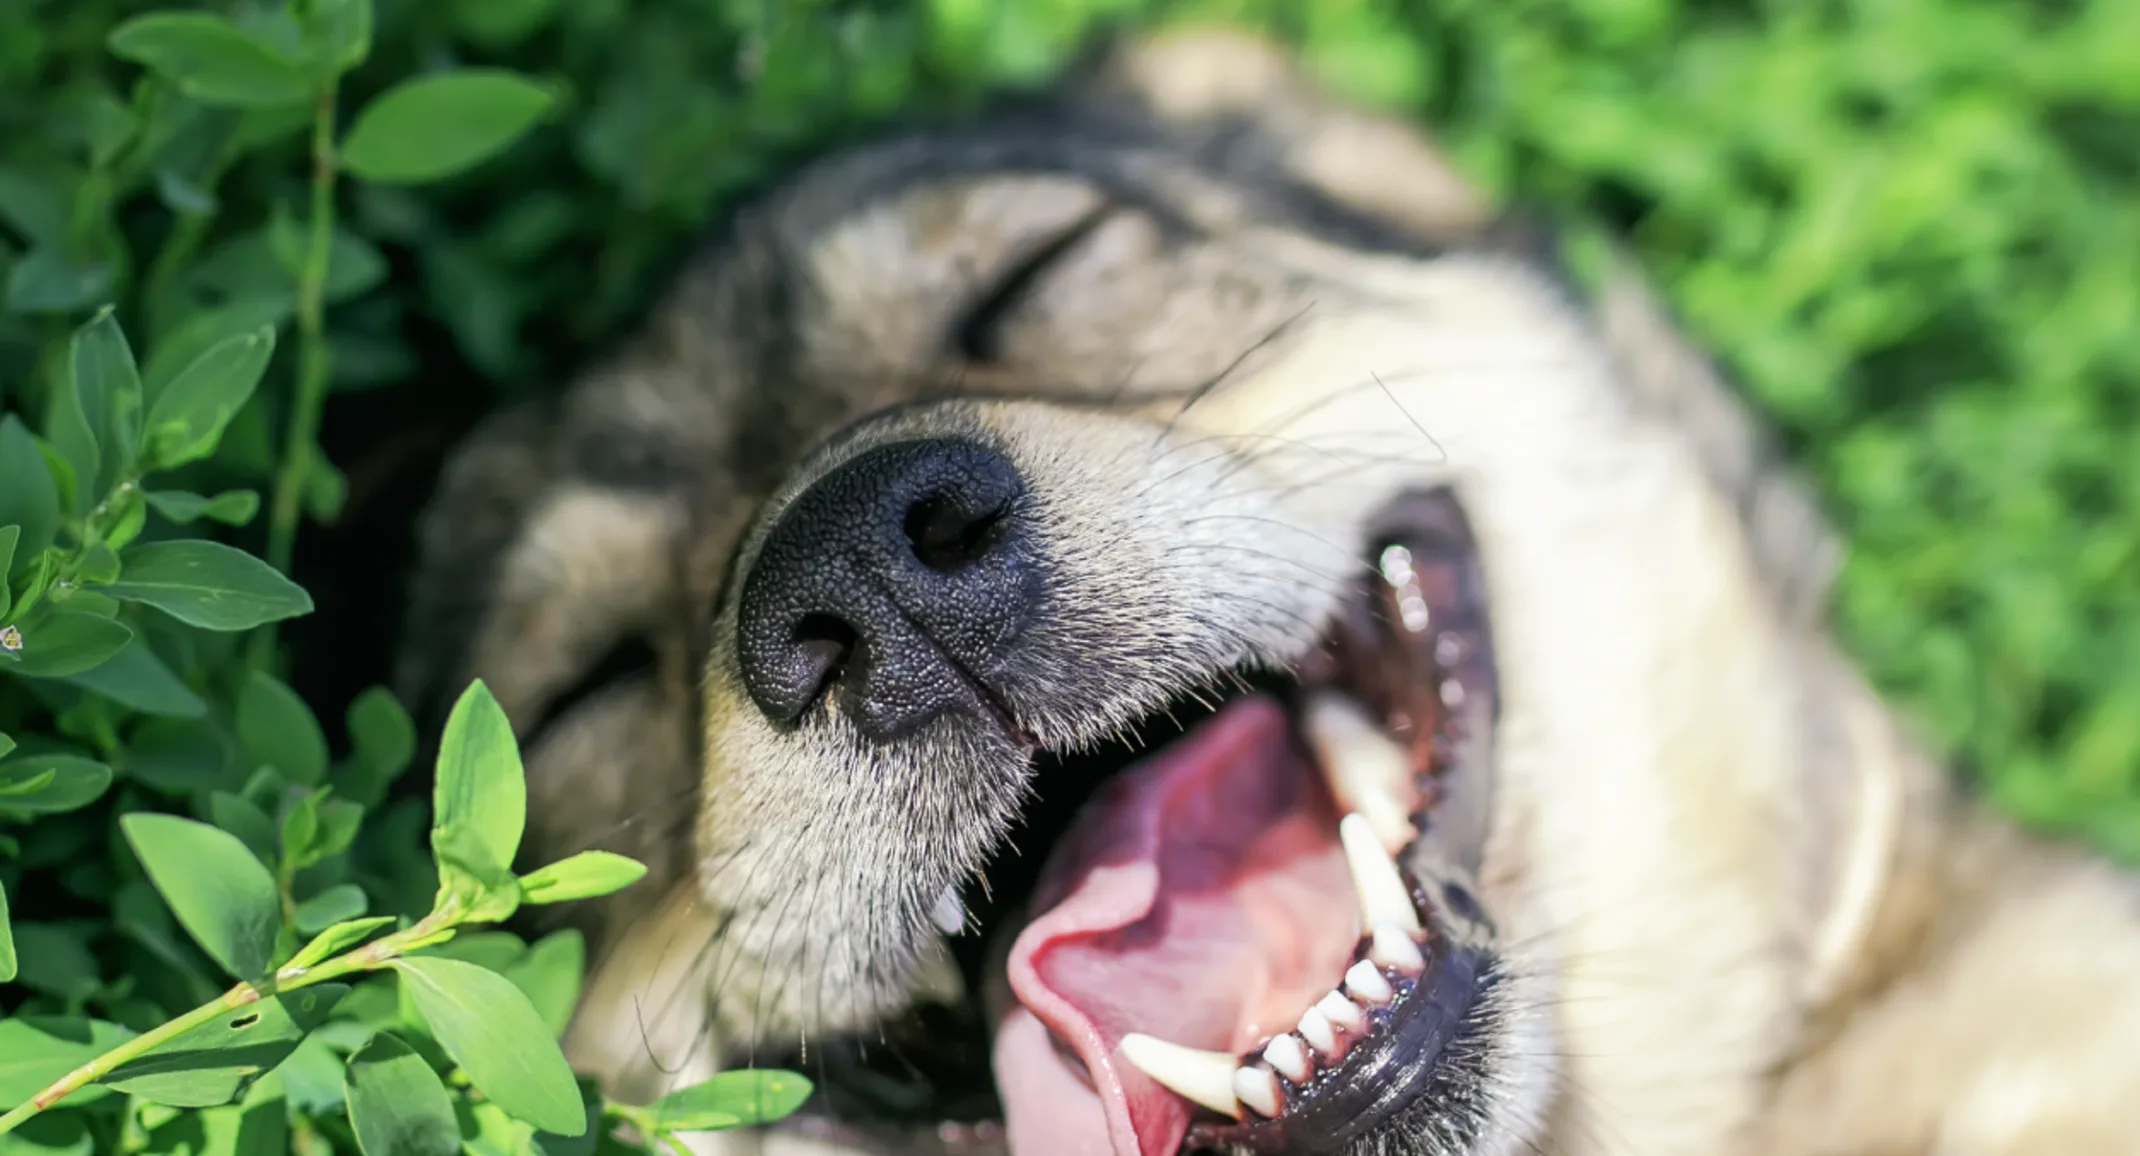 Dog smiling laying in greenery